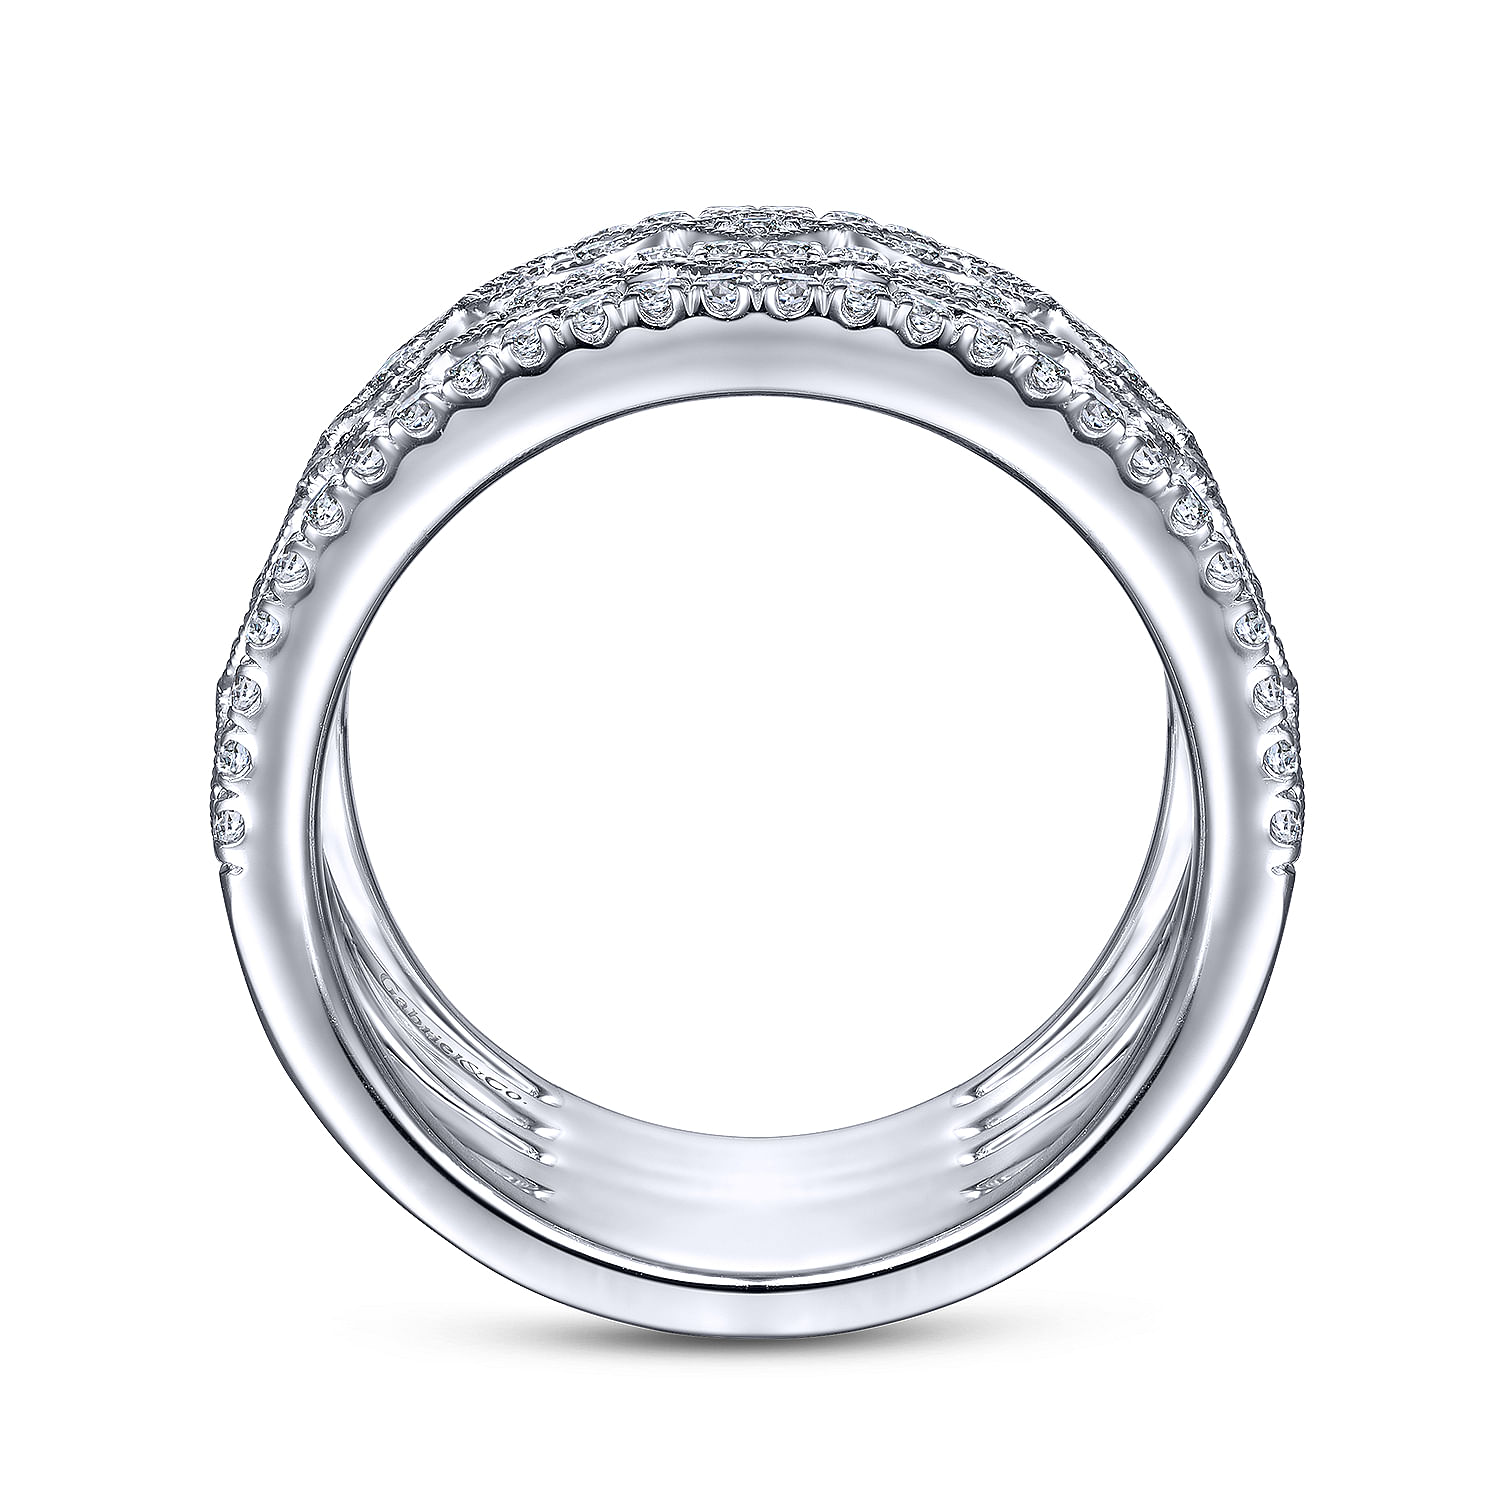 Wide Vintage Inspired 14K White Gold Diamond Ring - 0.75 ct - Shot 2